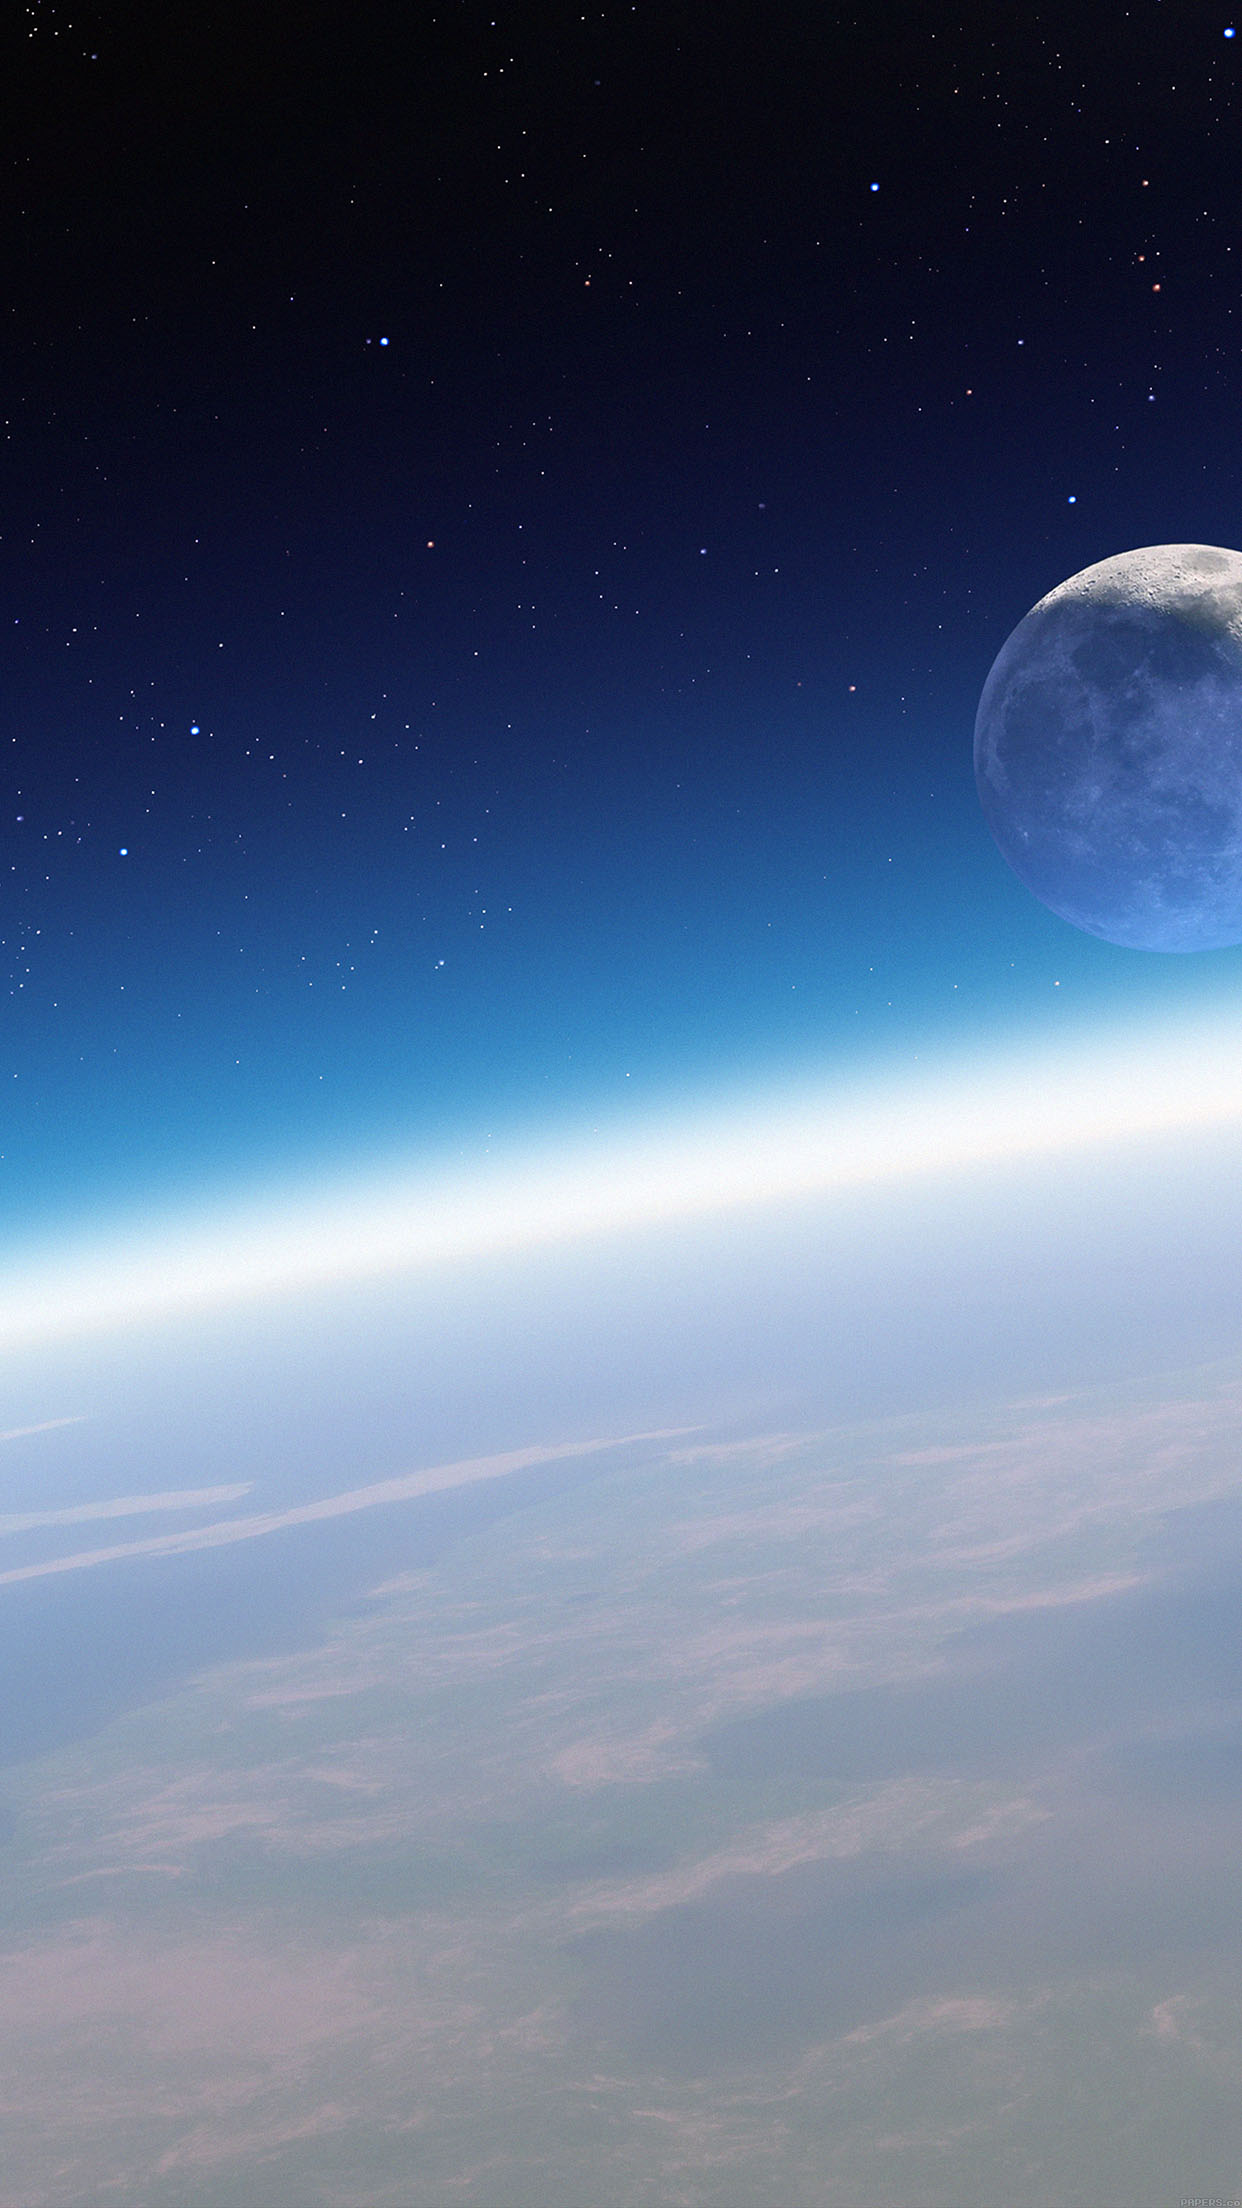 Earth Horizon In Space Smartphone Wallpaper Getphotos